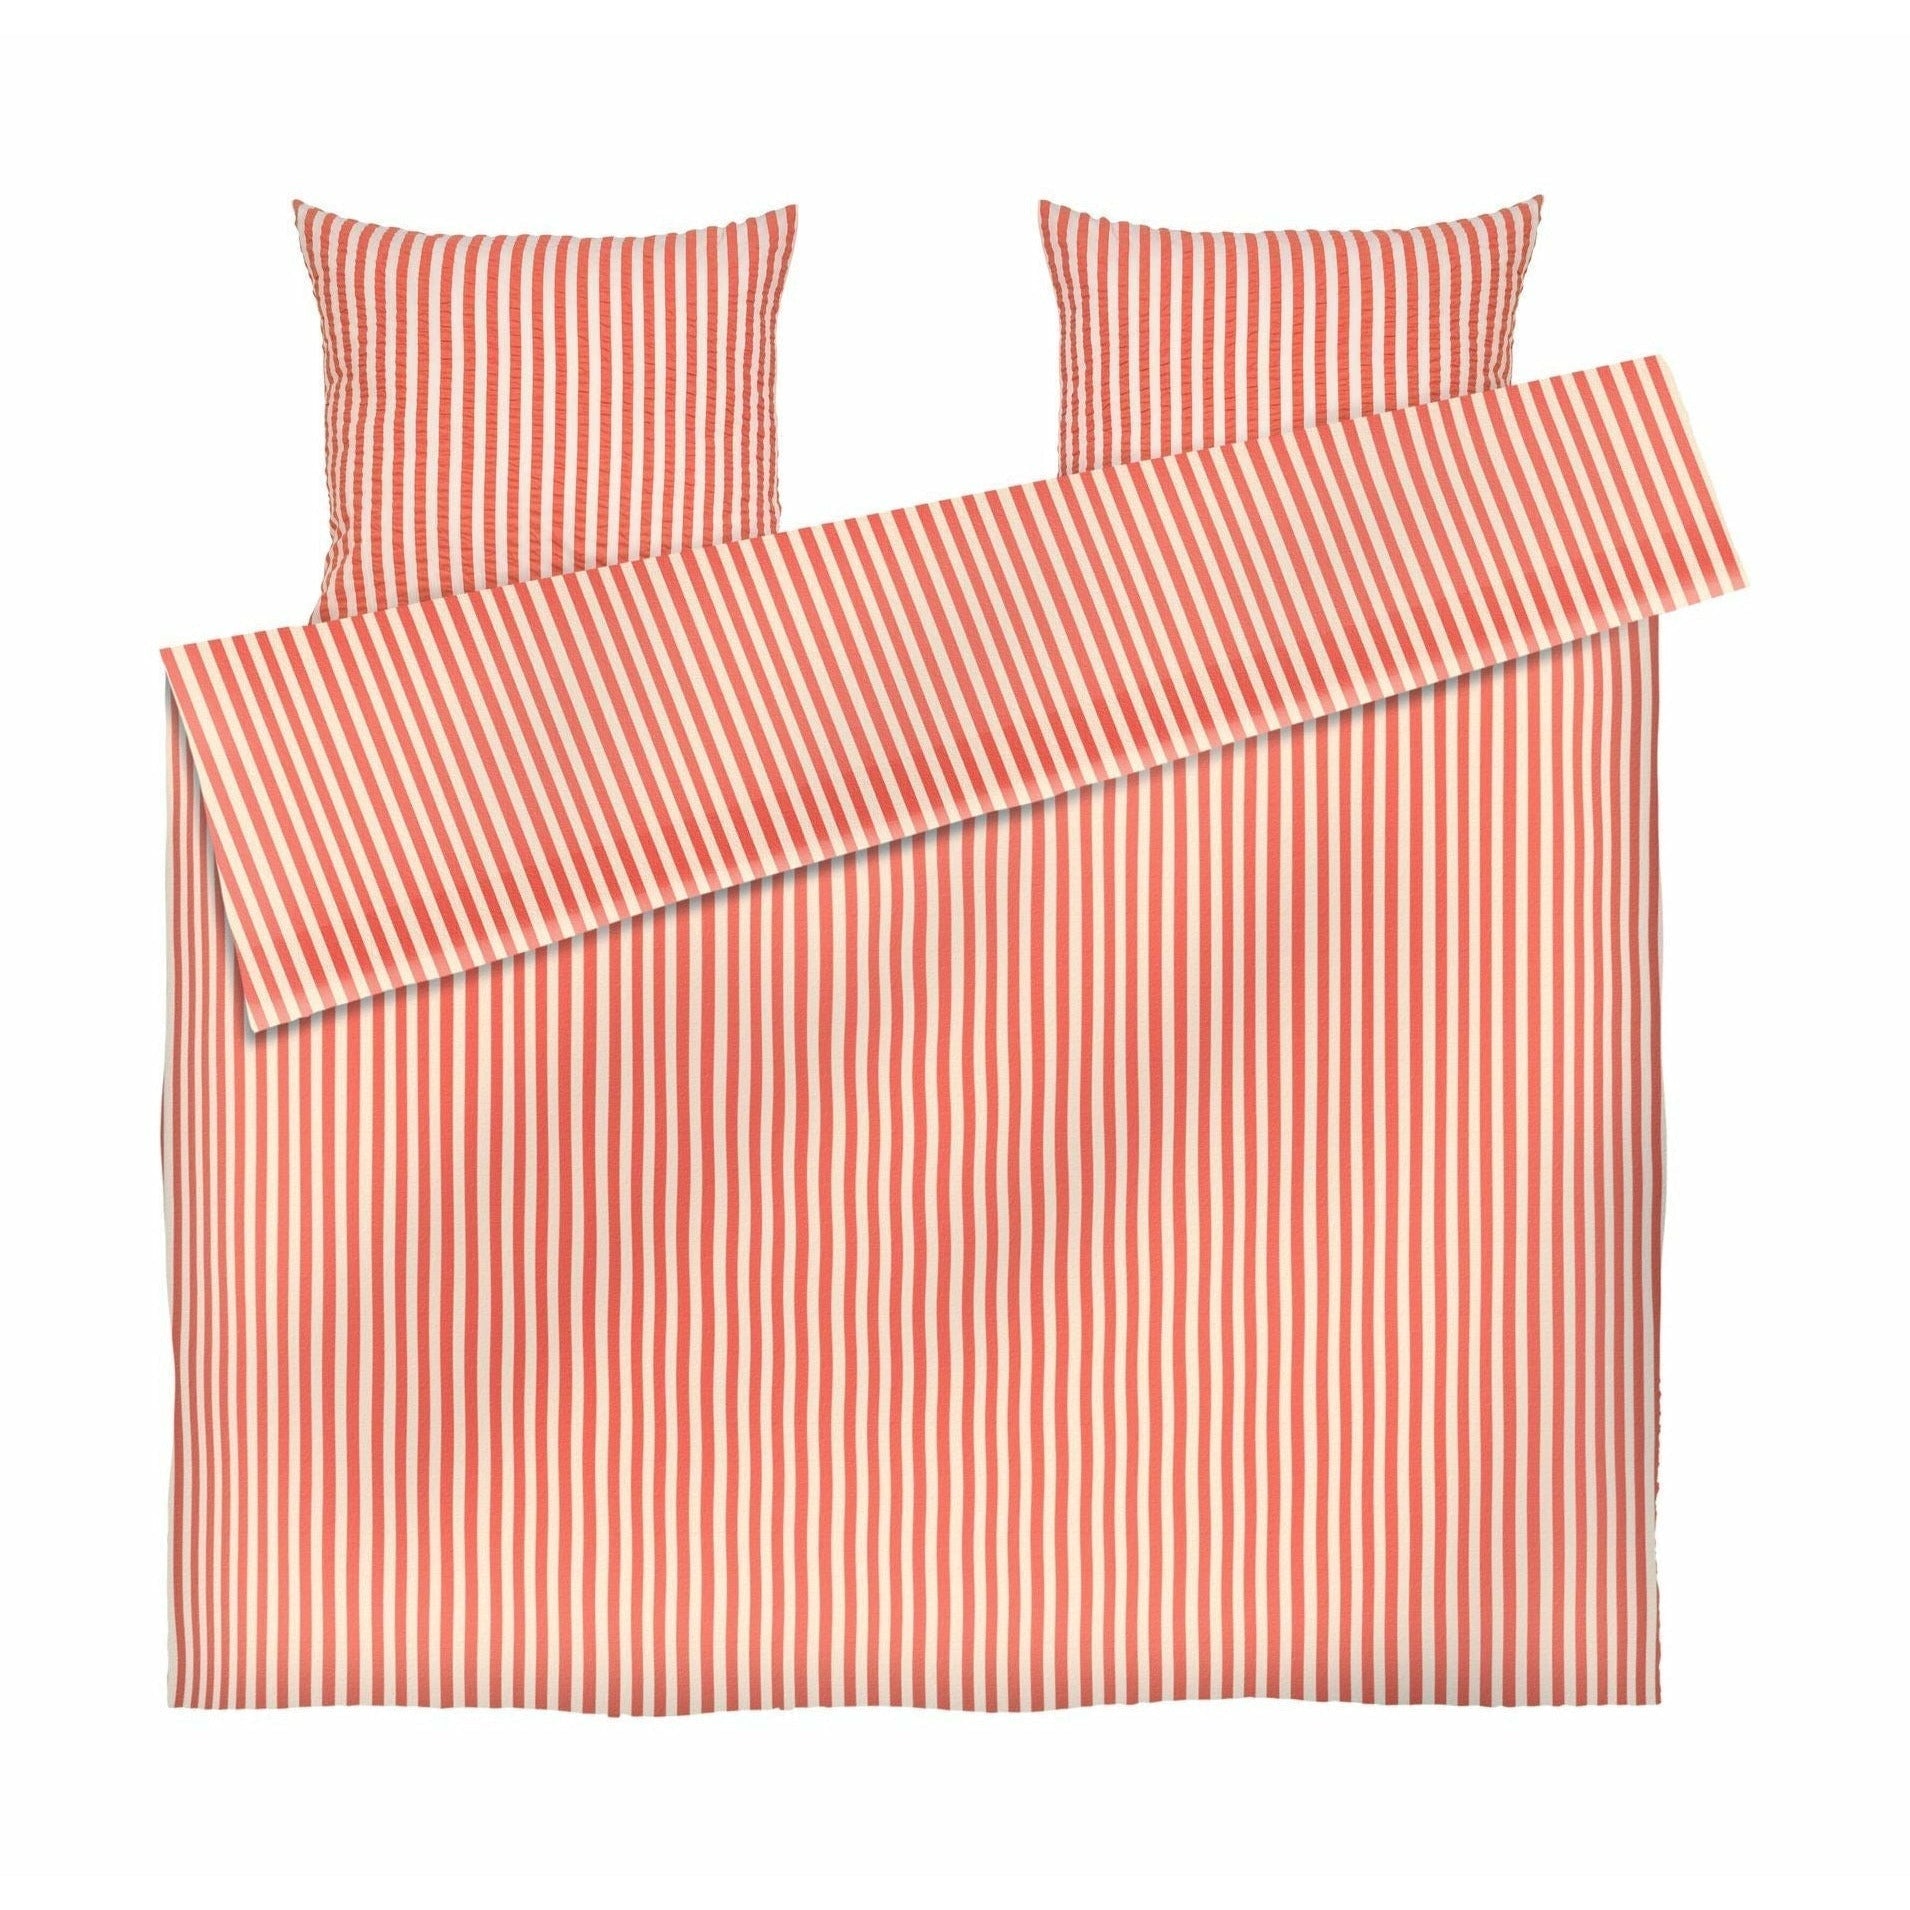 Juna Bæk & bølge linjer sängkläder 200x220 cm, chili/björk